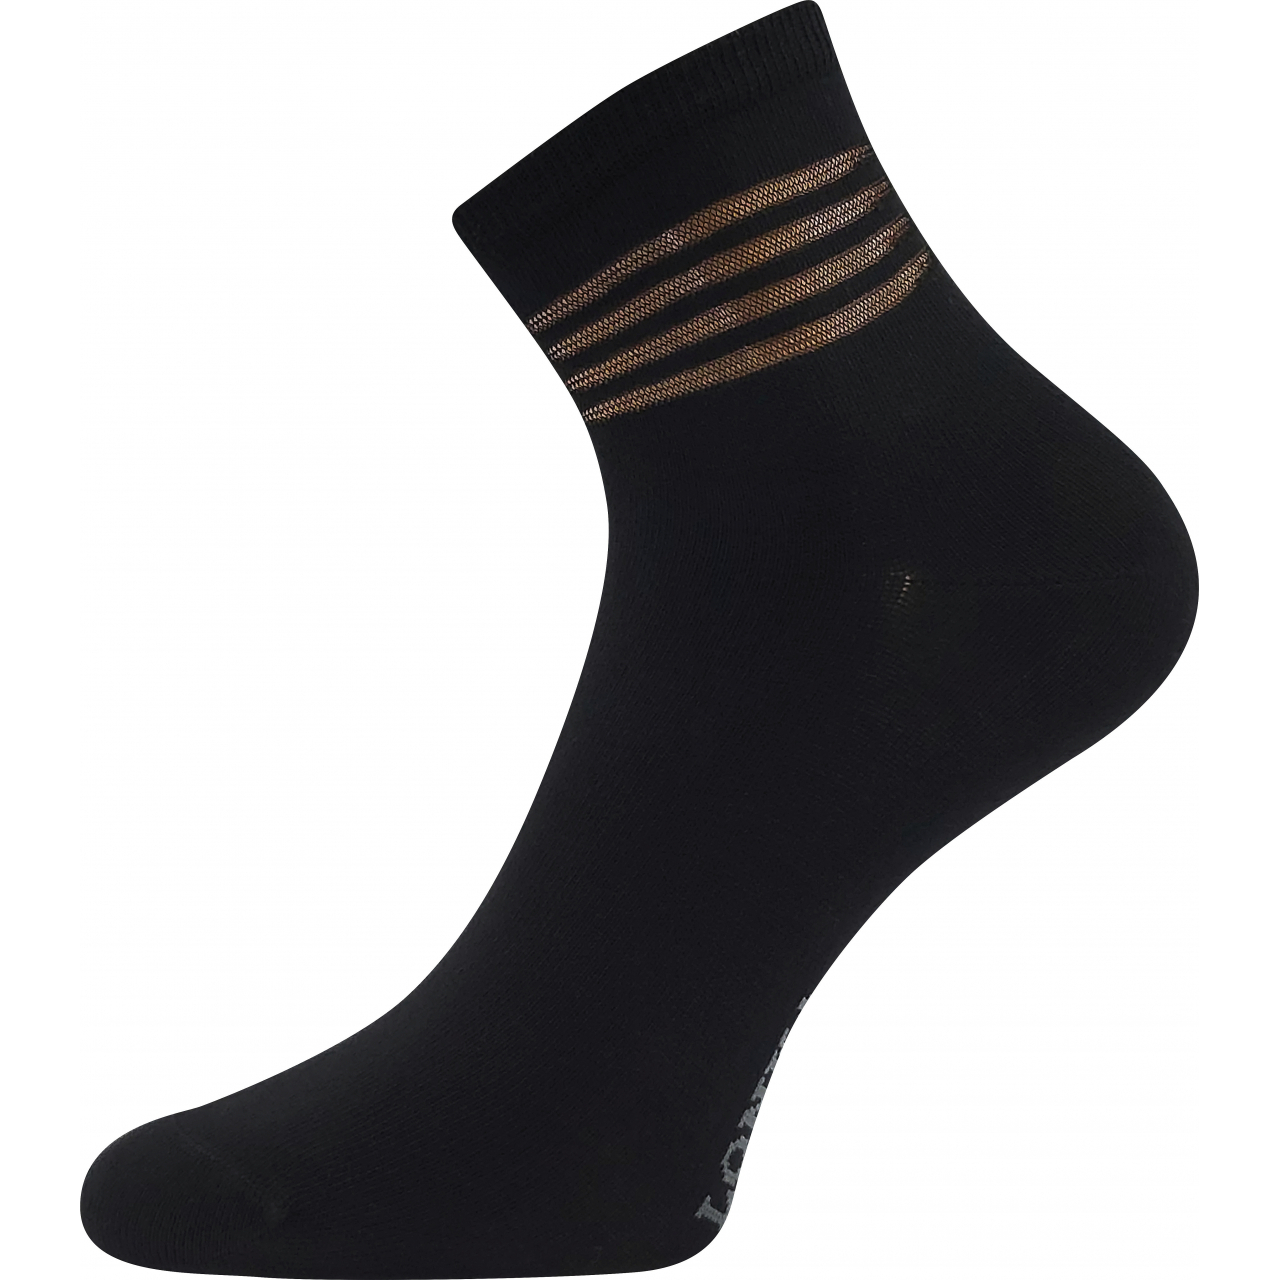 Ponožky dámské Lonka Fasketa - černé, 39-42